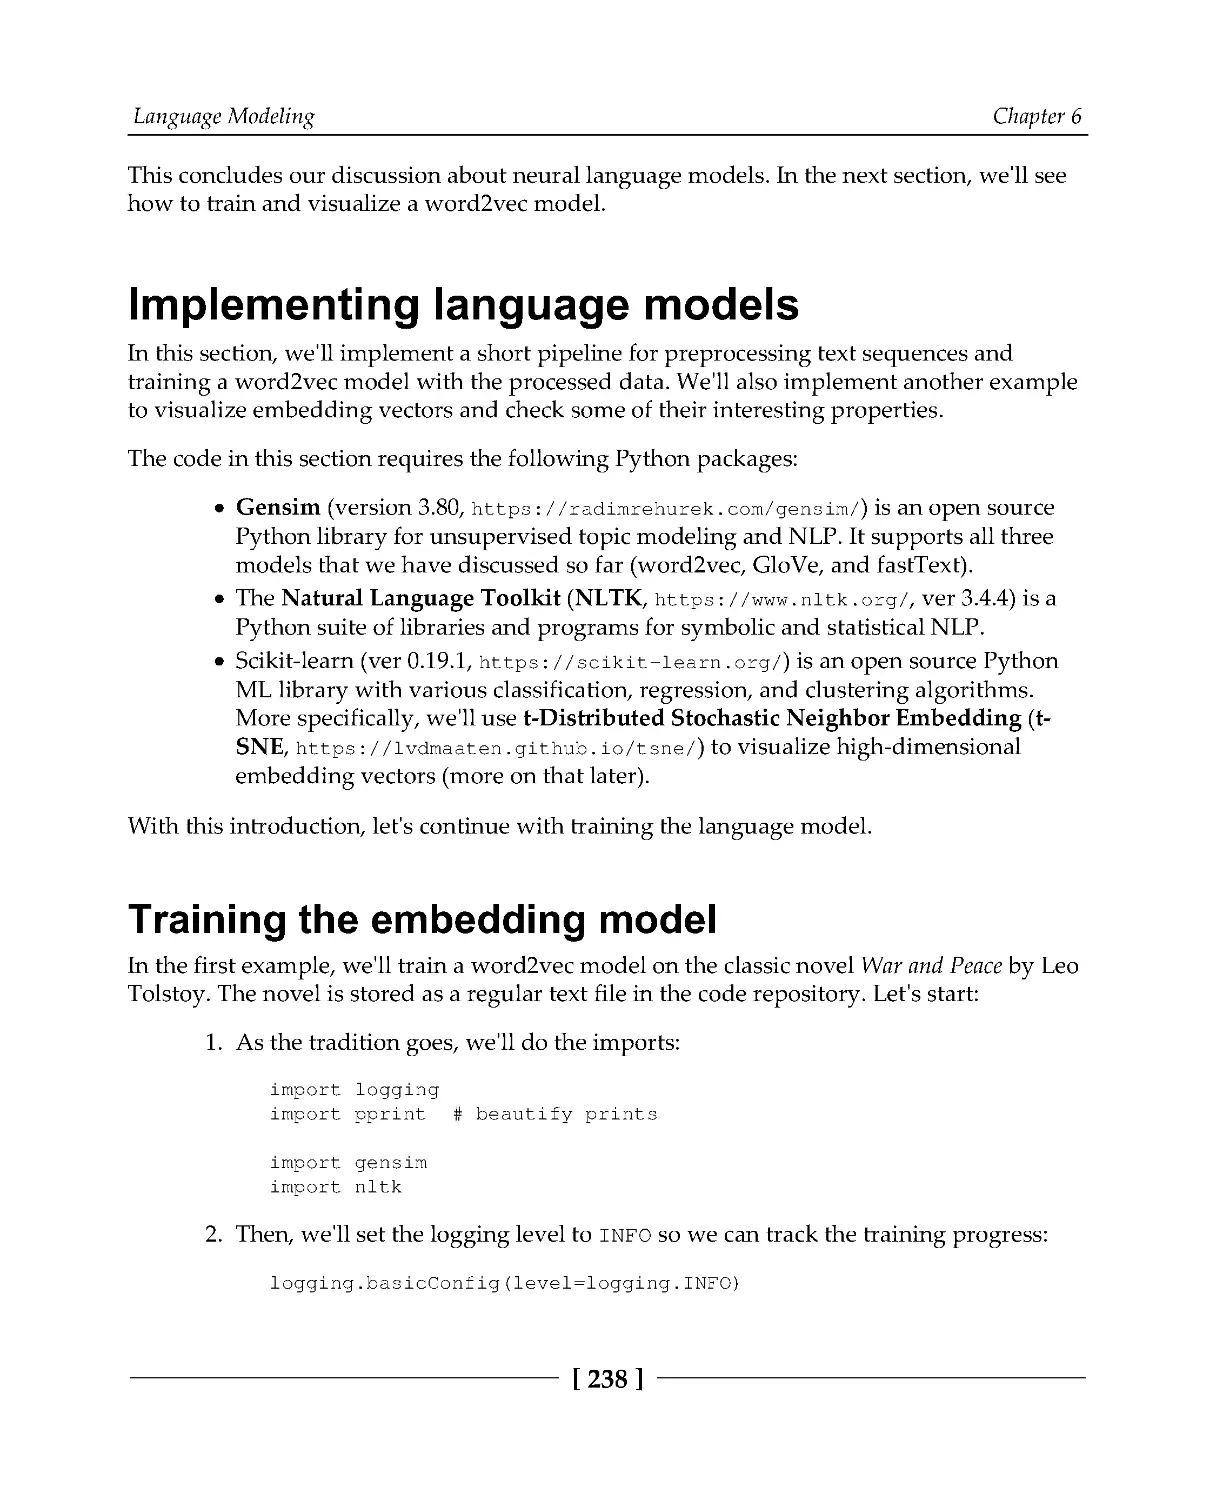 Implementing language models